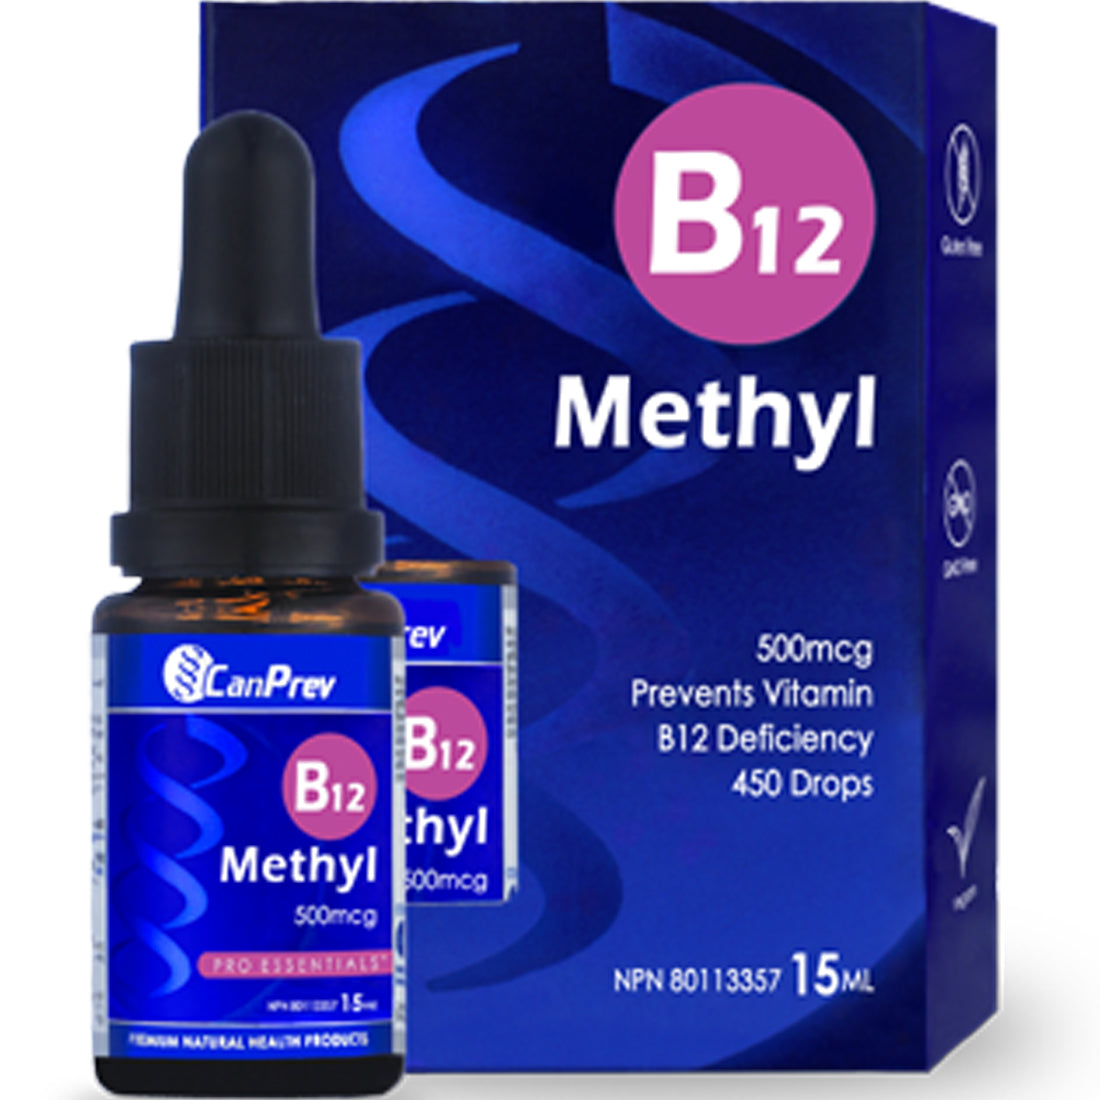 CanPrev B12 Methyl 500mcg Drops, 15ml